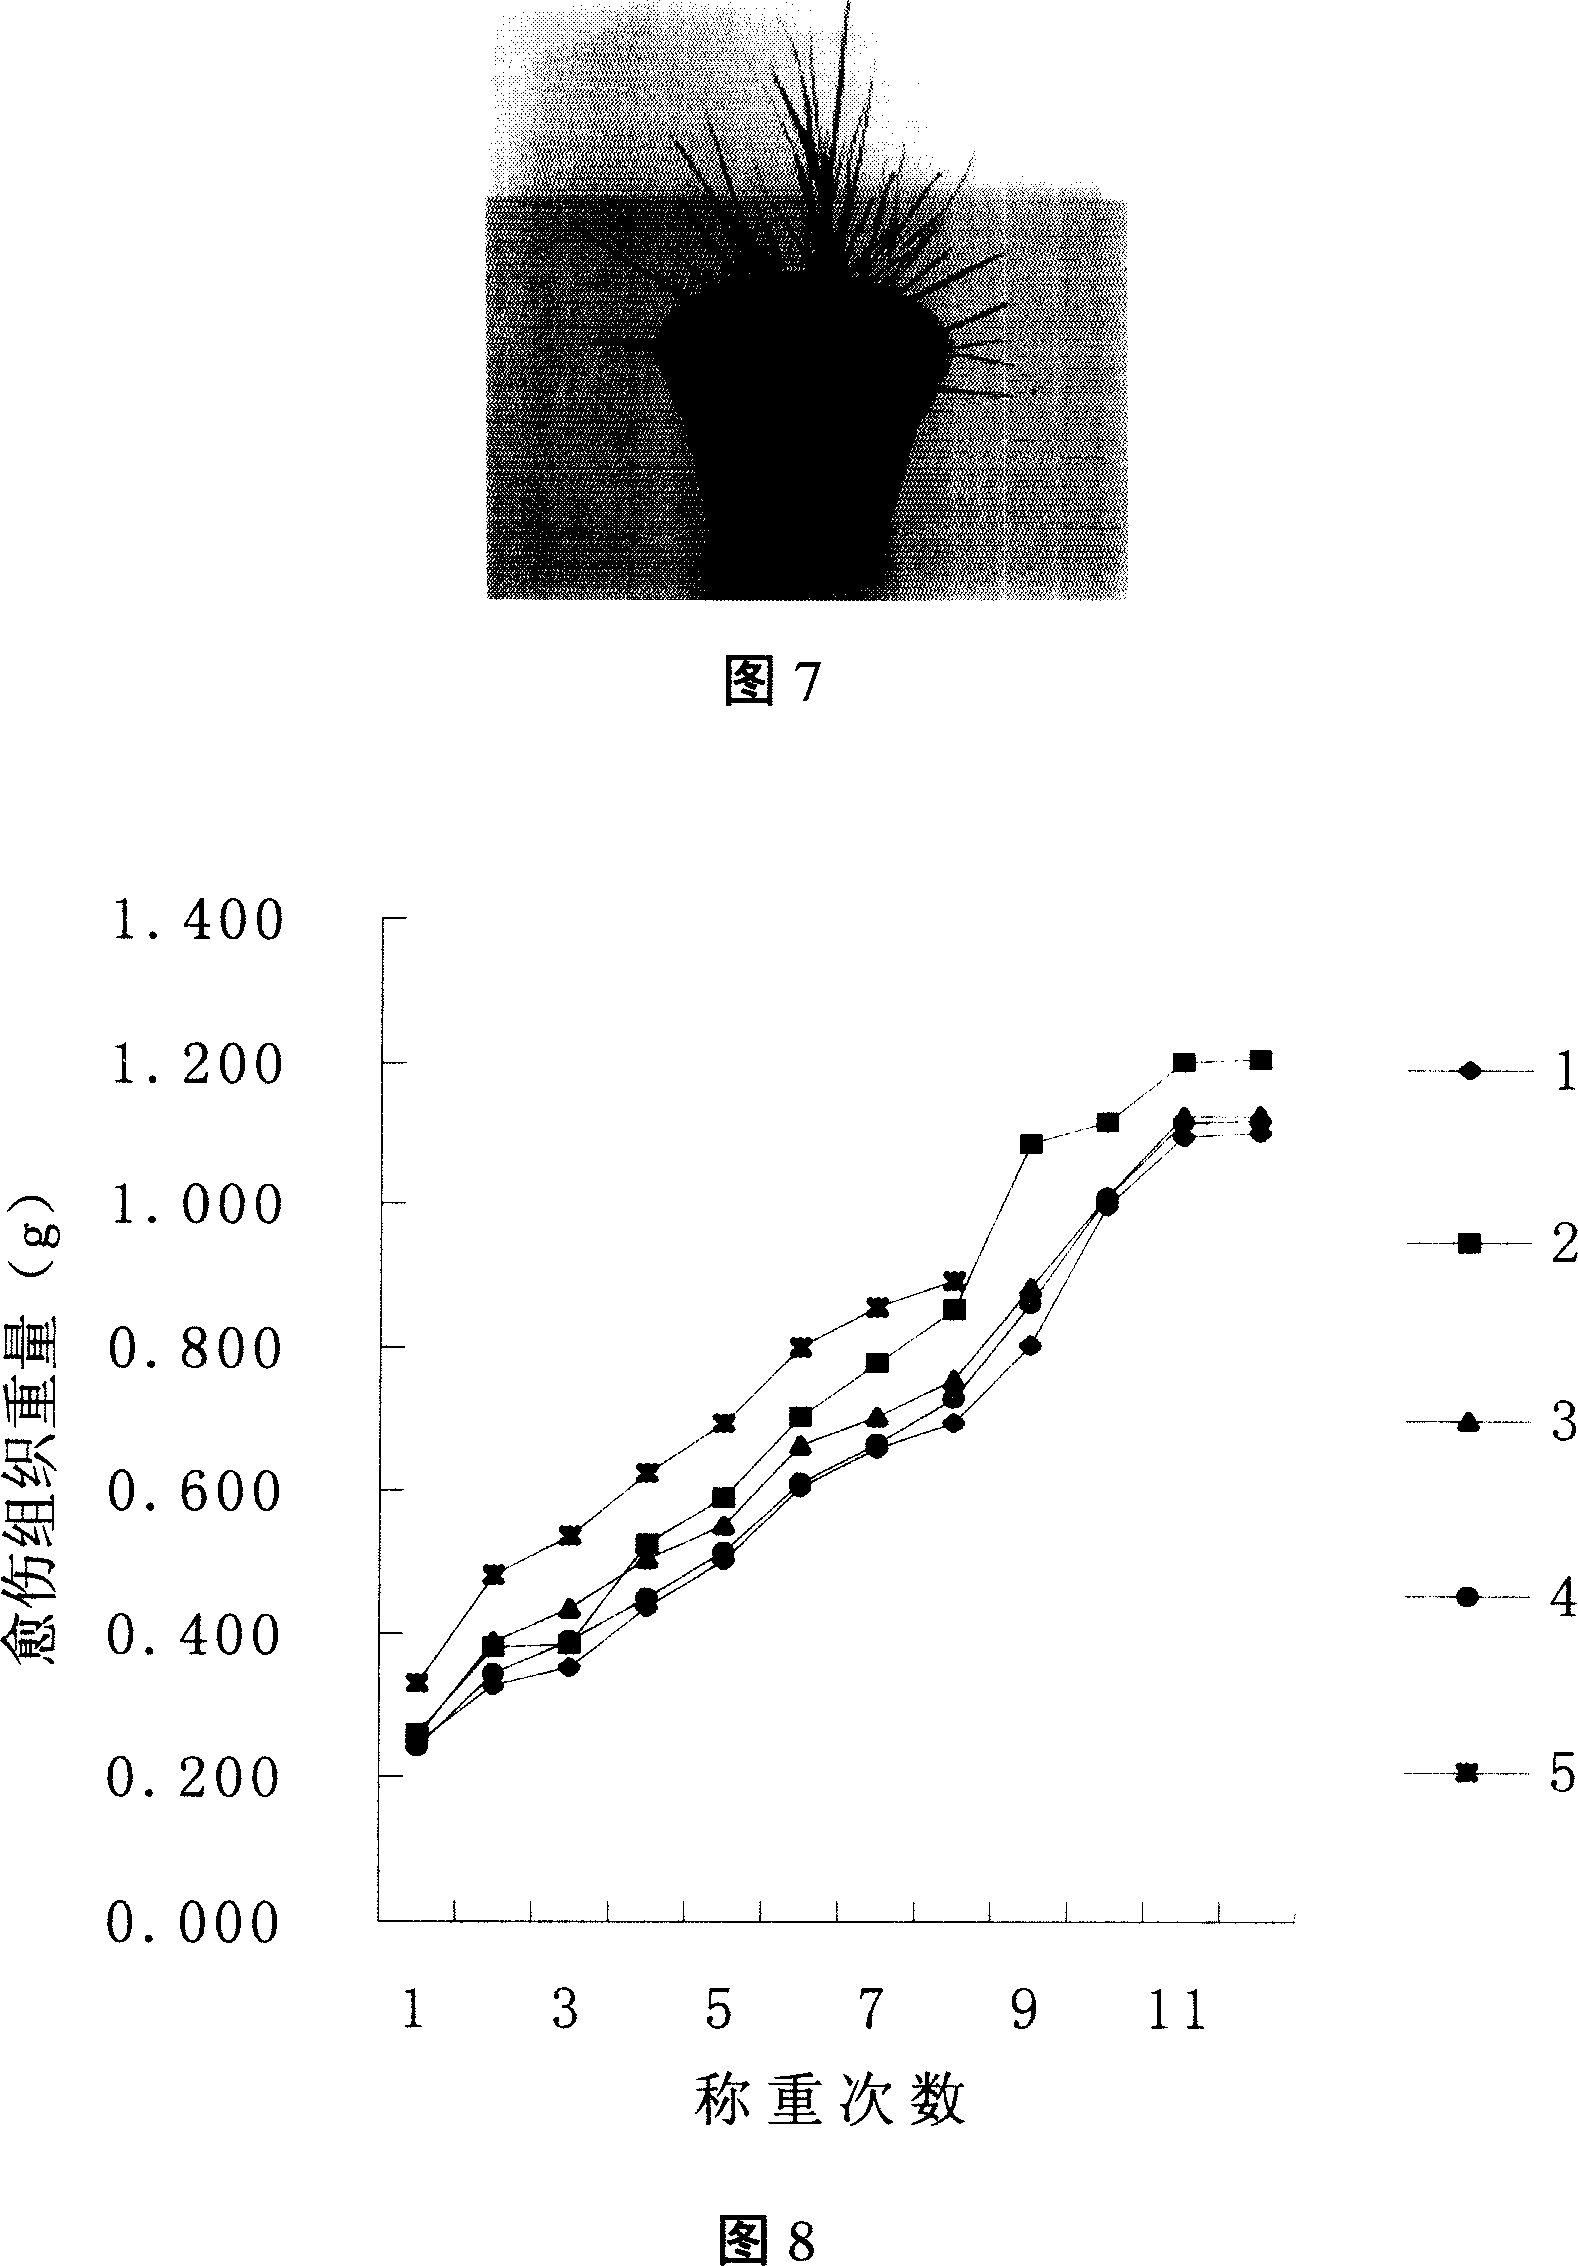 Regeneration method of Japanese lawngrass